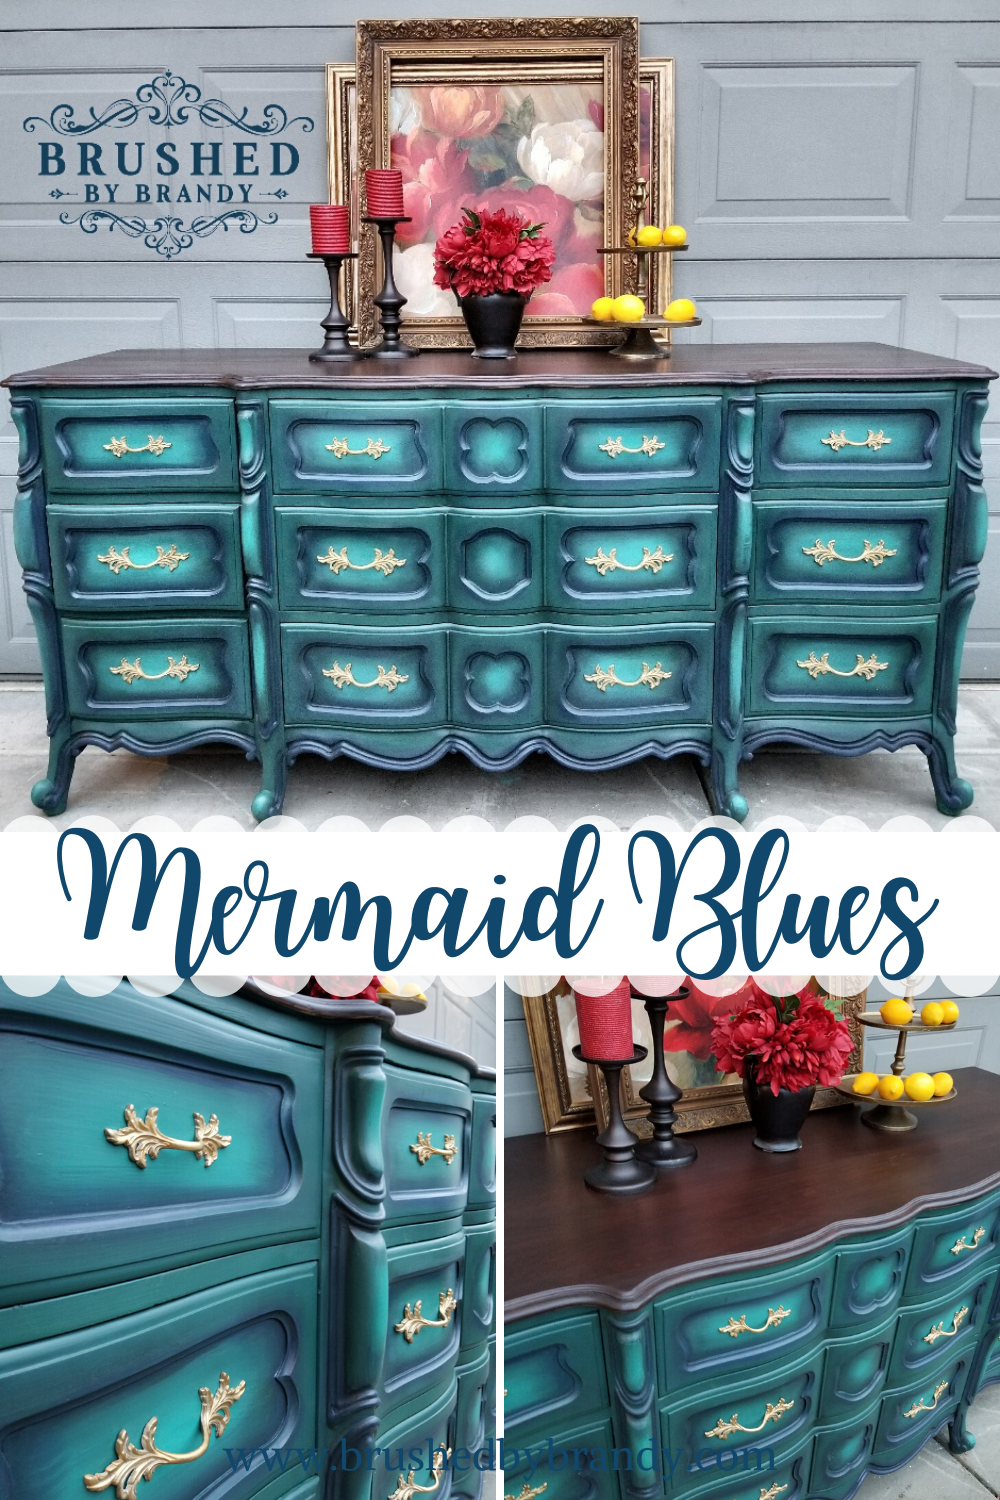 Mermaid Blues DIY Furniture Painting Tutorial! Brushed by Brandy How to Paint Furniture Tutorials - Mermaid Blues DIY Furniture Painting Tutorial! Brushed by Brandy How to Paint Furniture Tutorials -   17 diy Furniture dresser ideas